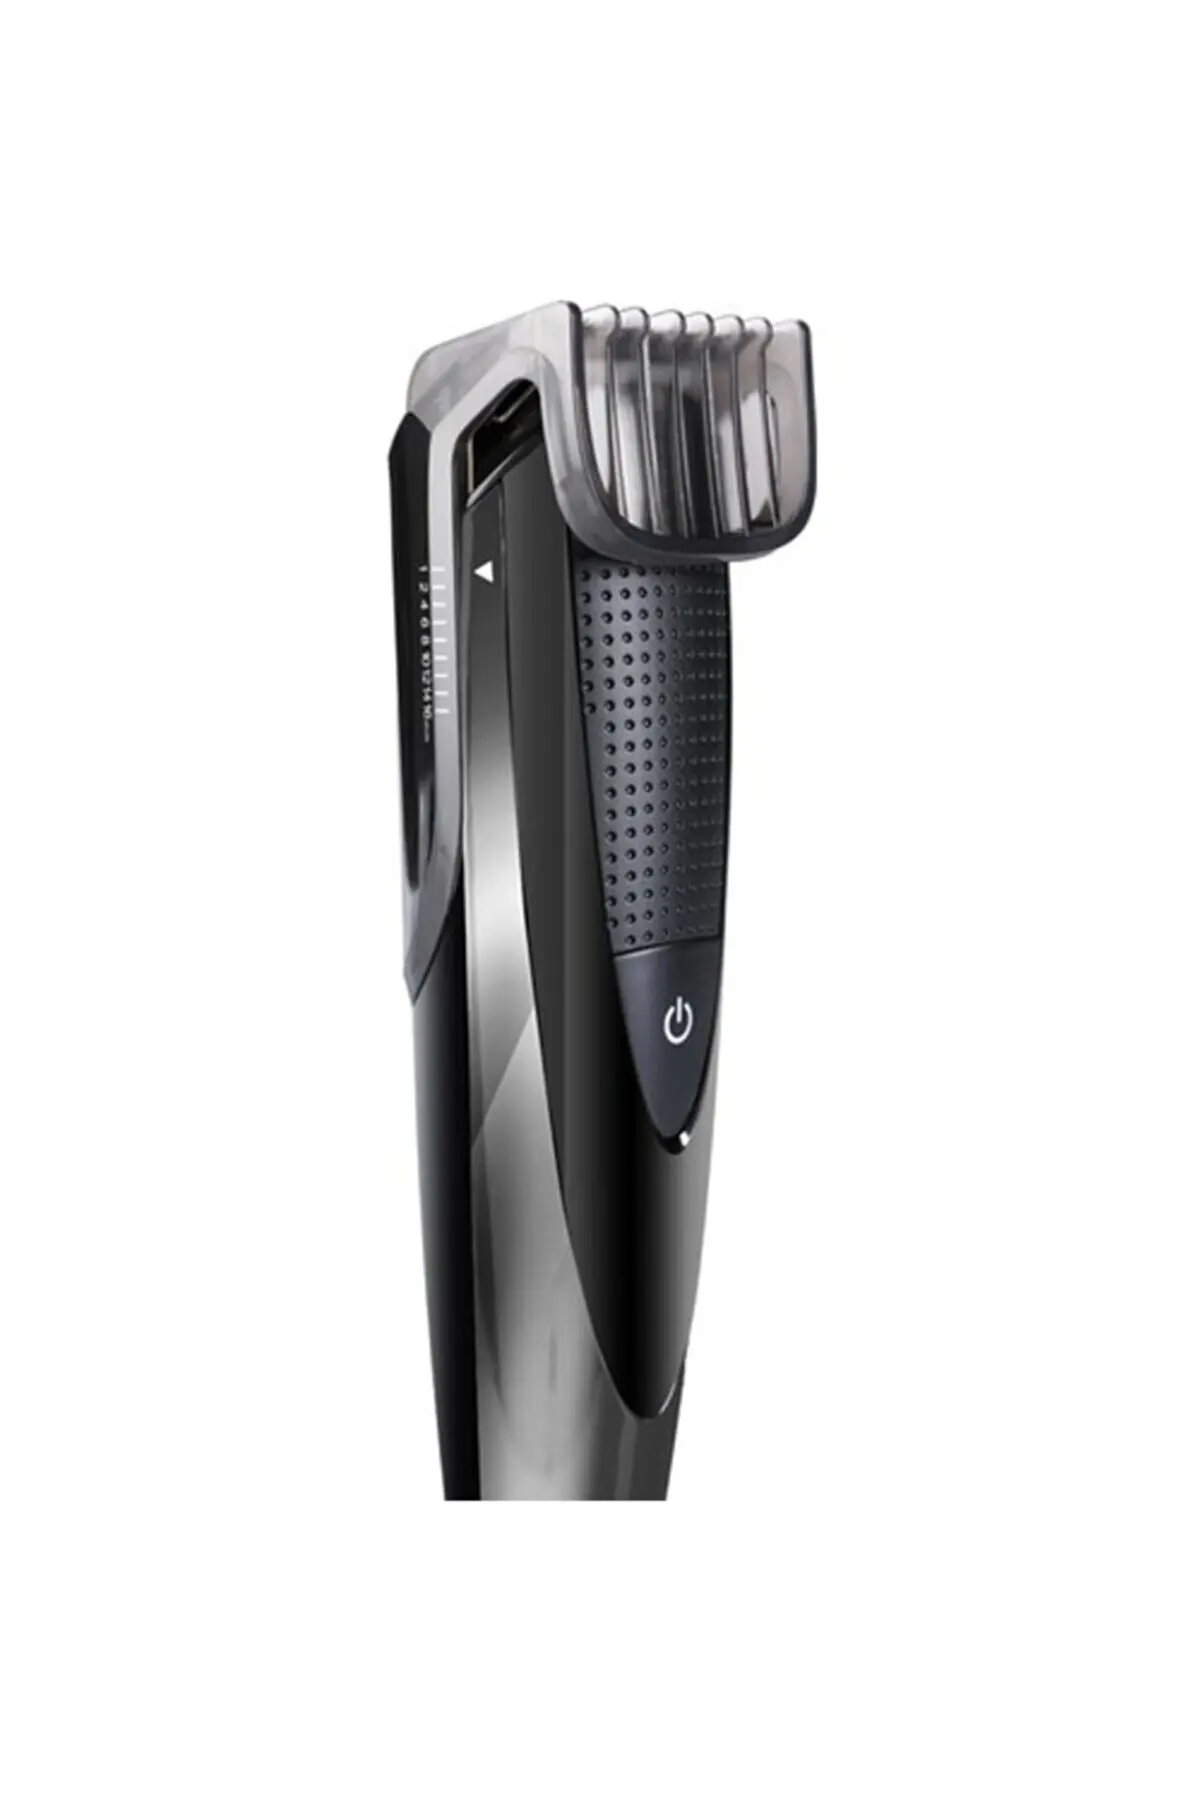 Gm-8101 12 iN 1 Electric Shavers Hair Trimmer Barber Hair Clipper Cordless Hair Cutting Machine Beard Men Razors enlarge